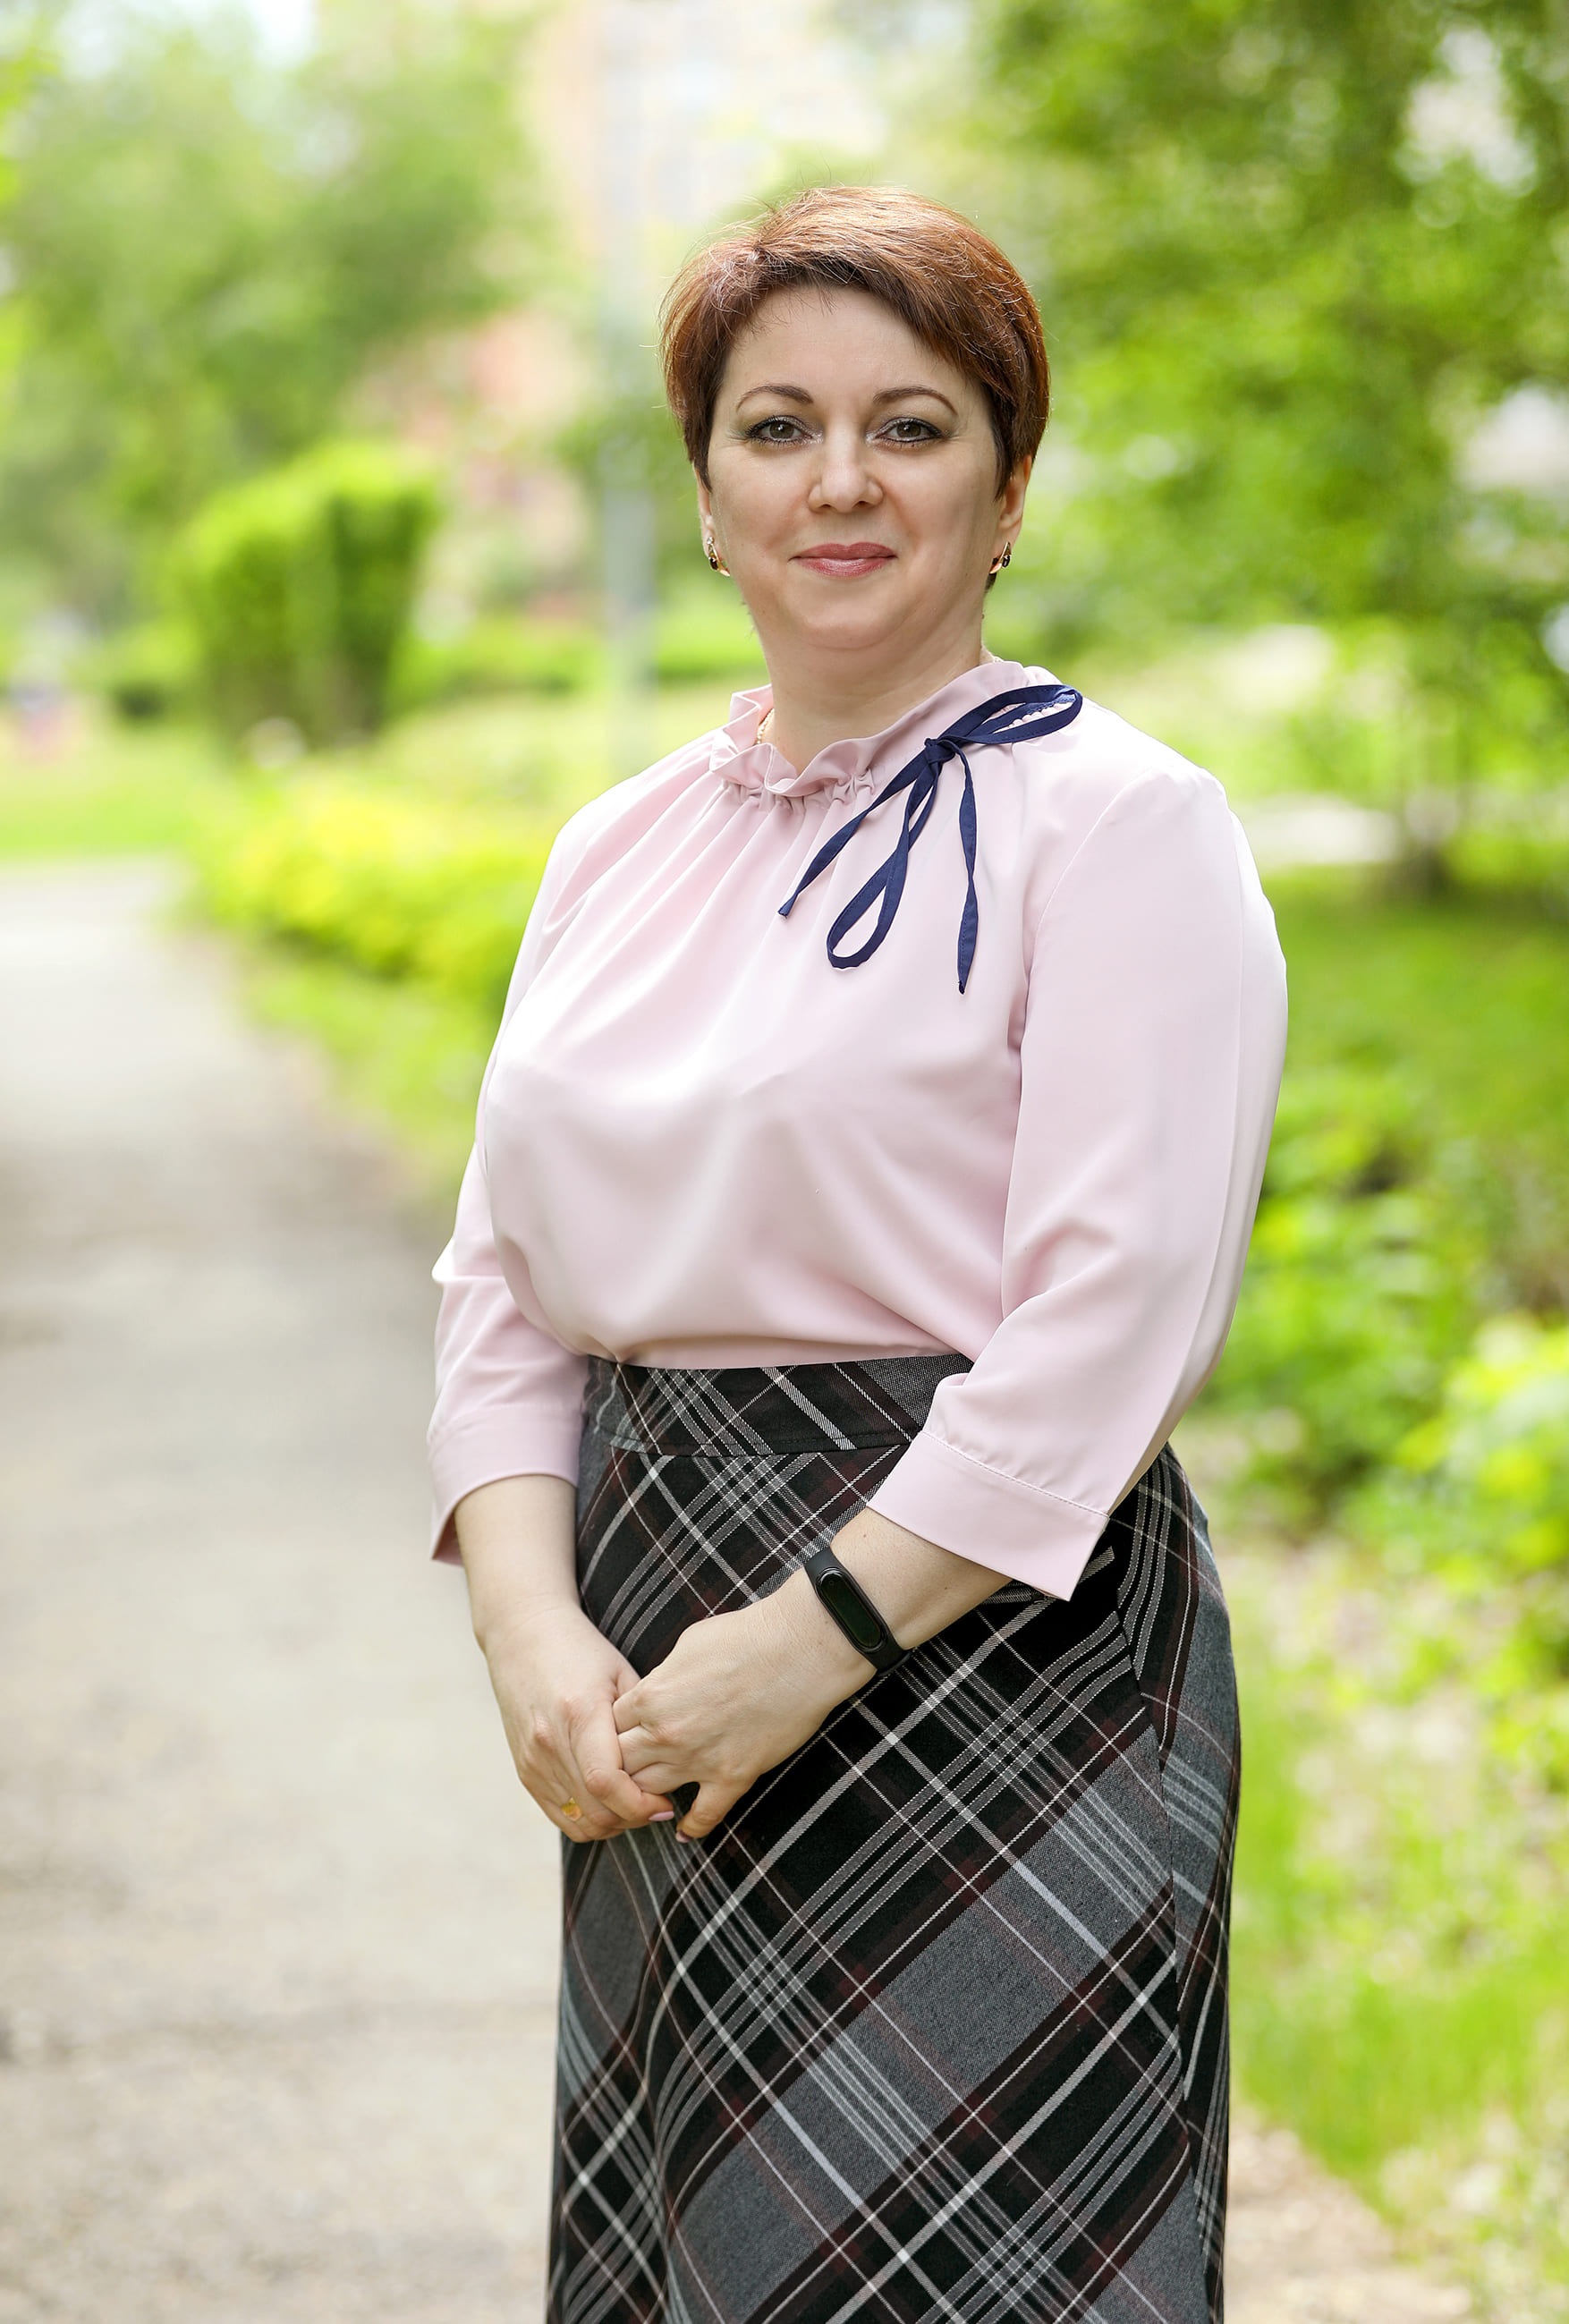 Спасенкова Ольга Владимировна